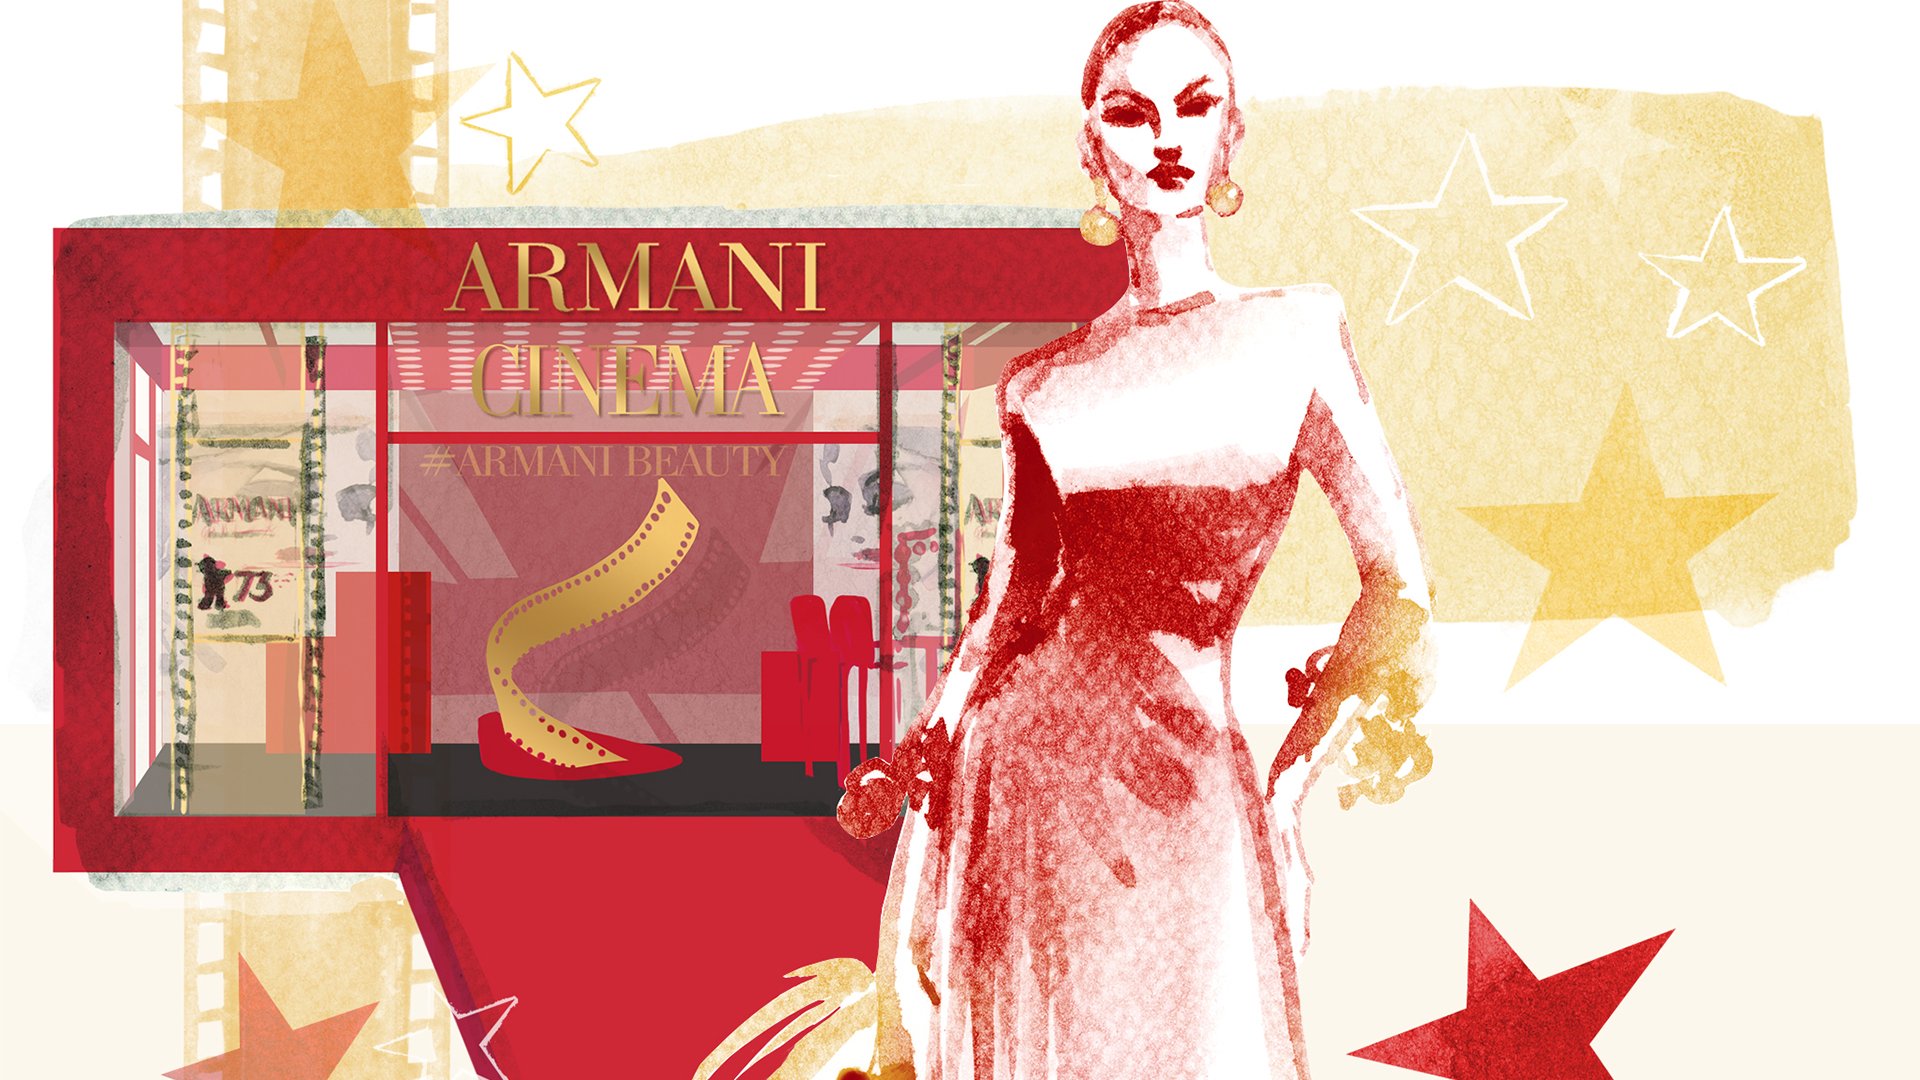 Press-release-illustration-for-Armani-Beauty-by-Virginia-Romo-3.jpg